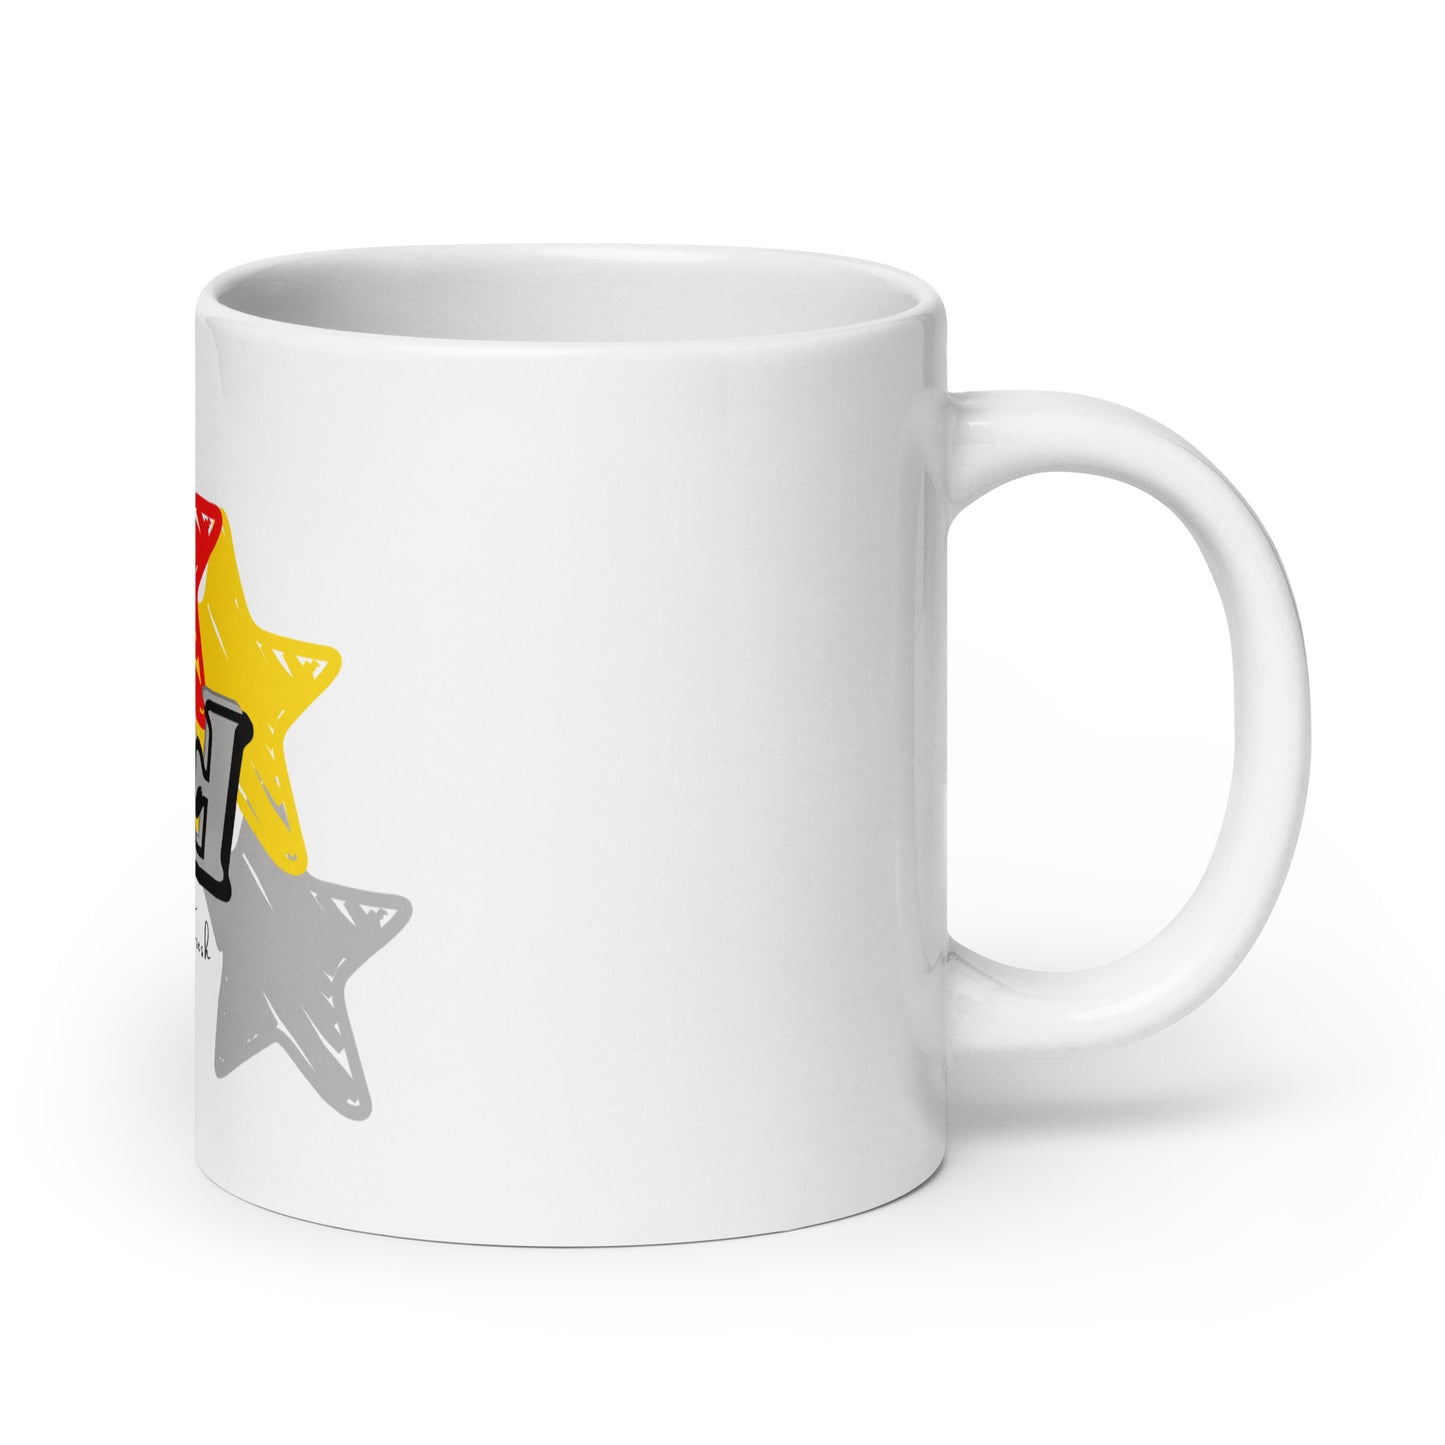 'Big Star' Bright - Five Star Fresh White glossy mug